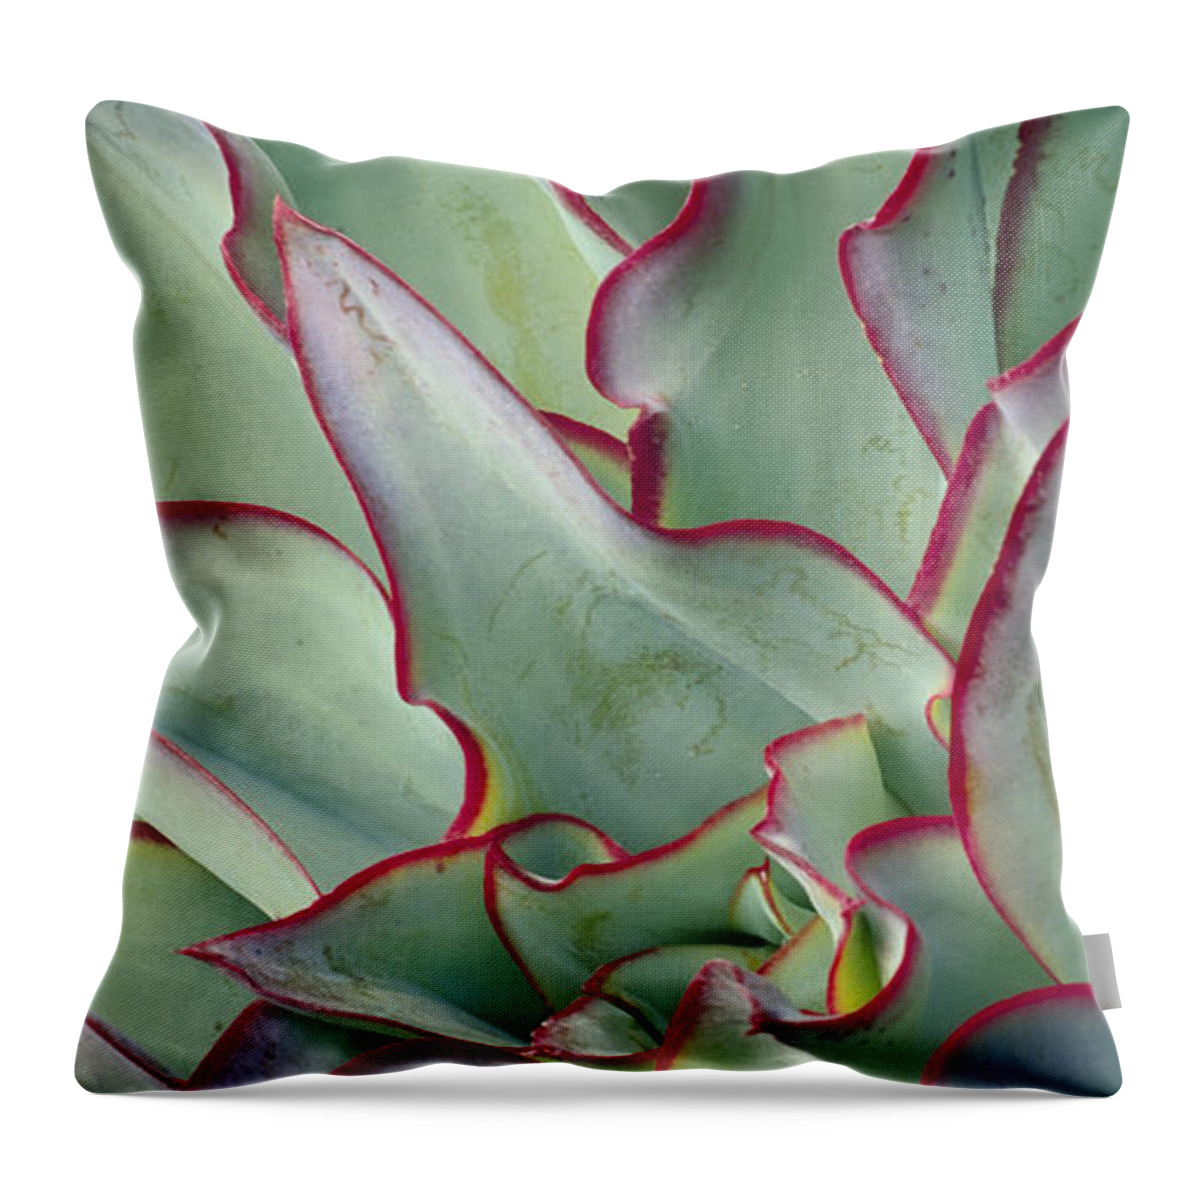 Green Wall Throw Pillow featuring the photograph Echeveria subrigida by Saxon Holt